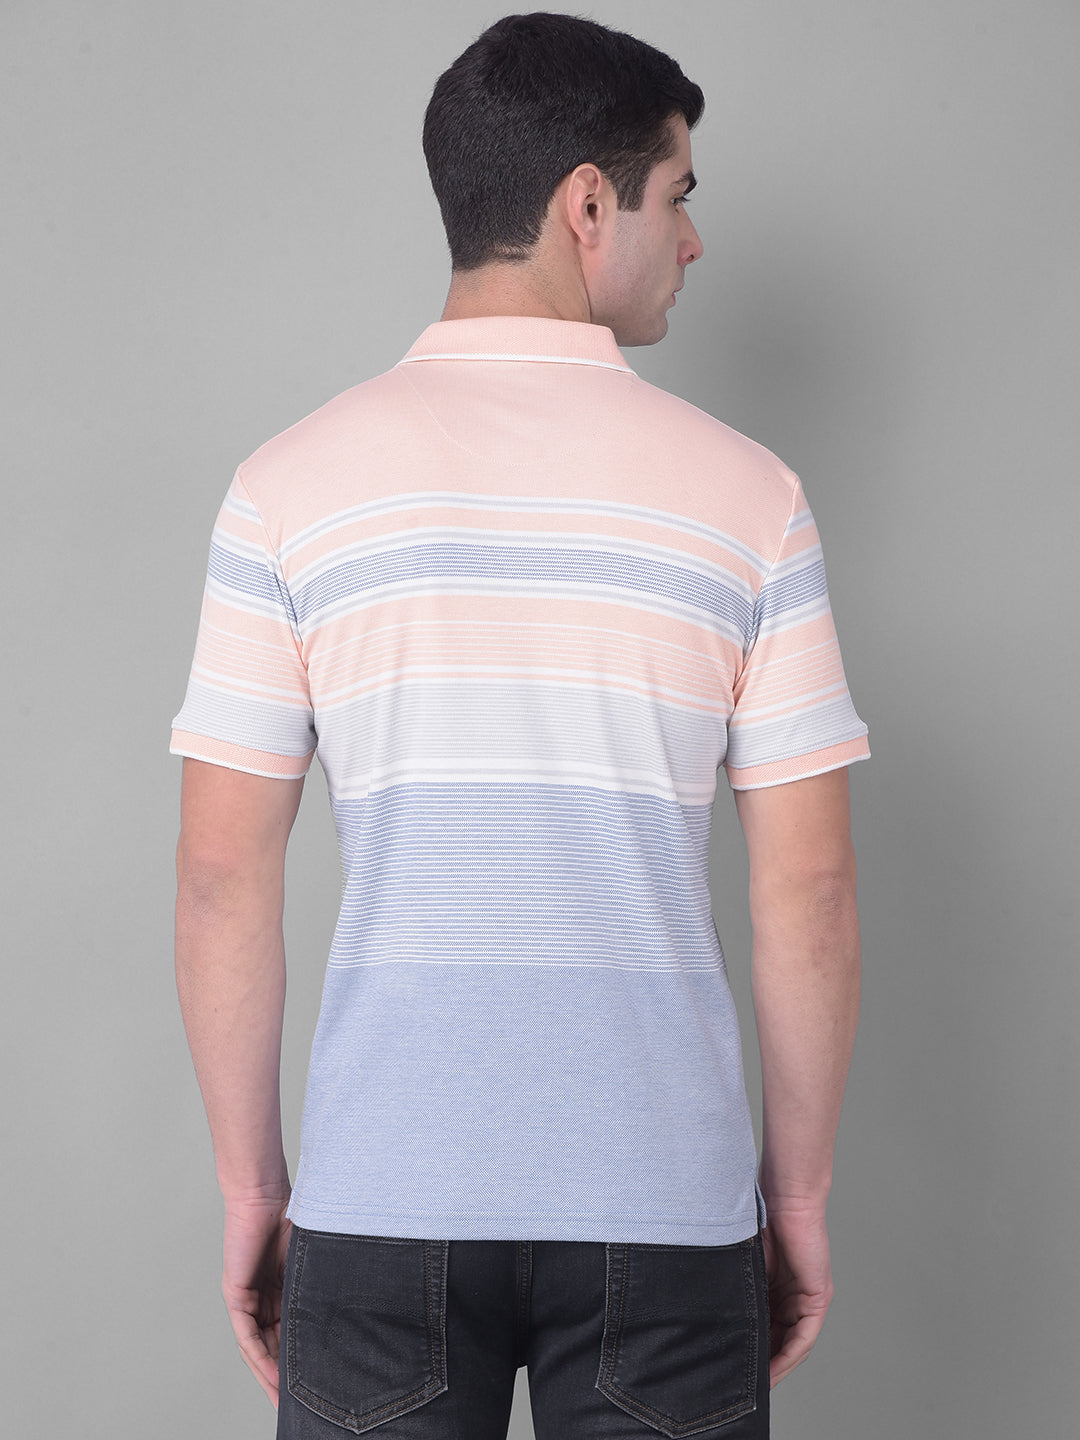 cobb crayola light peach striped polo neck t-shirt